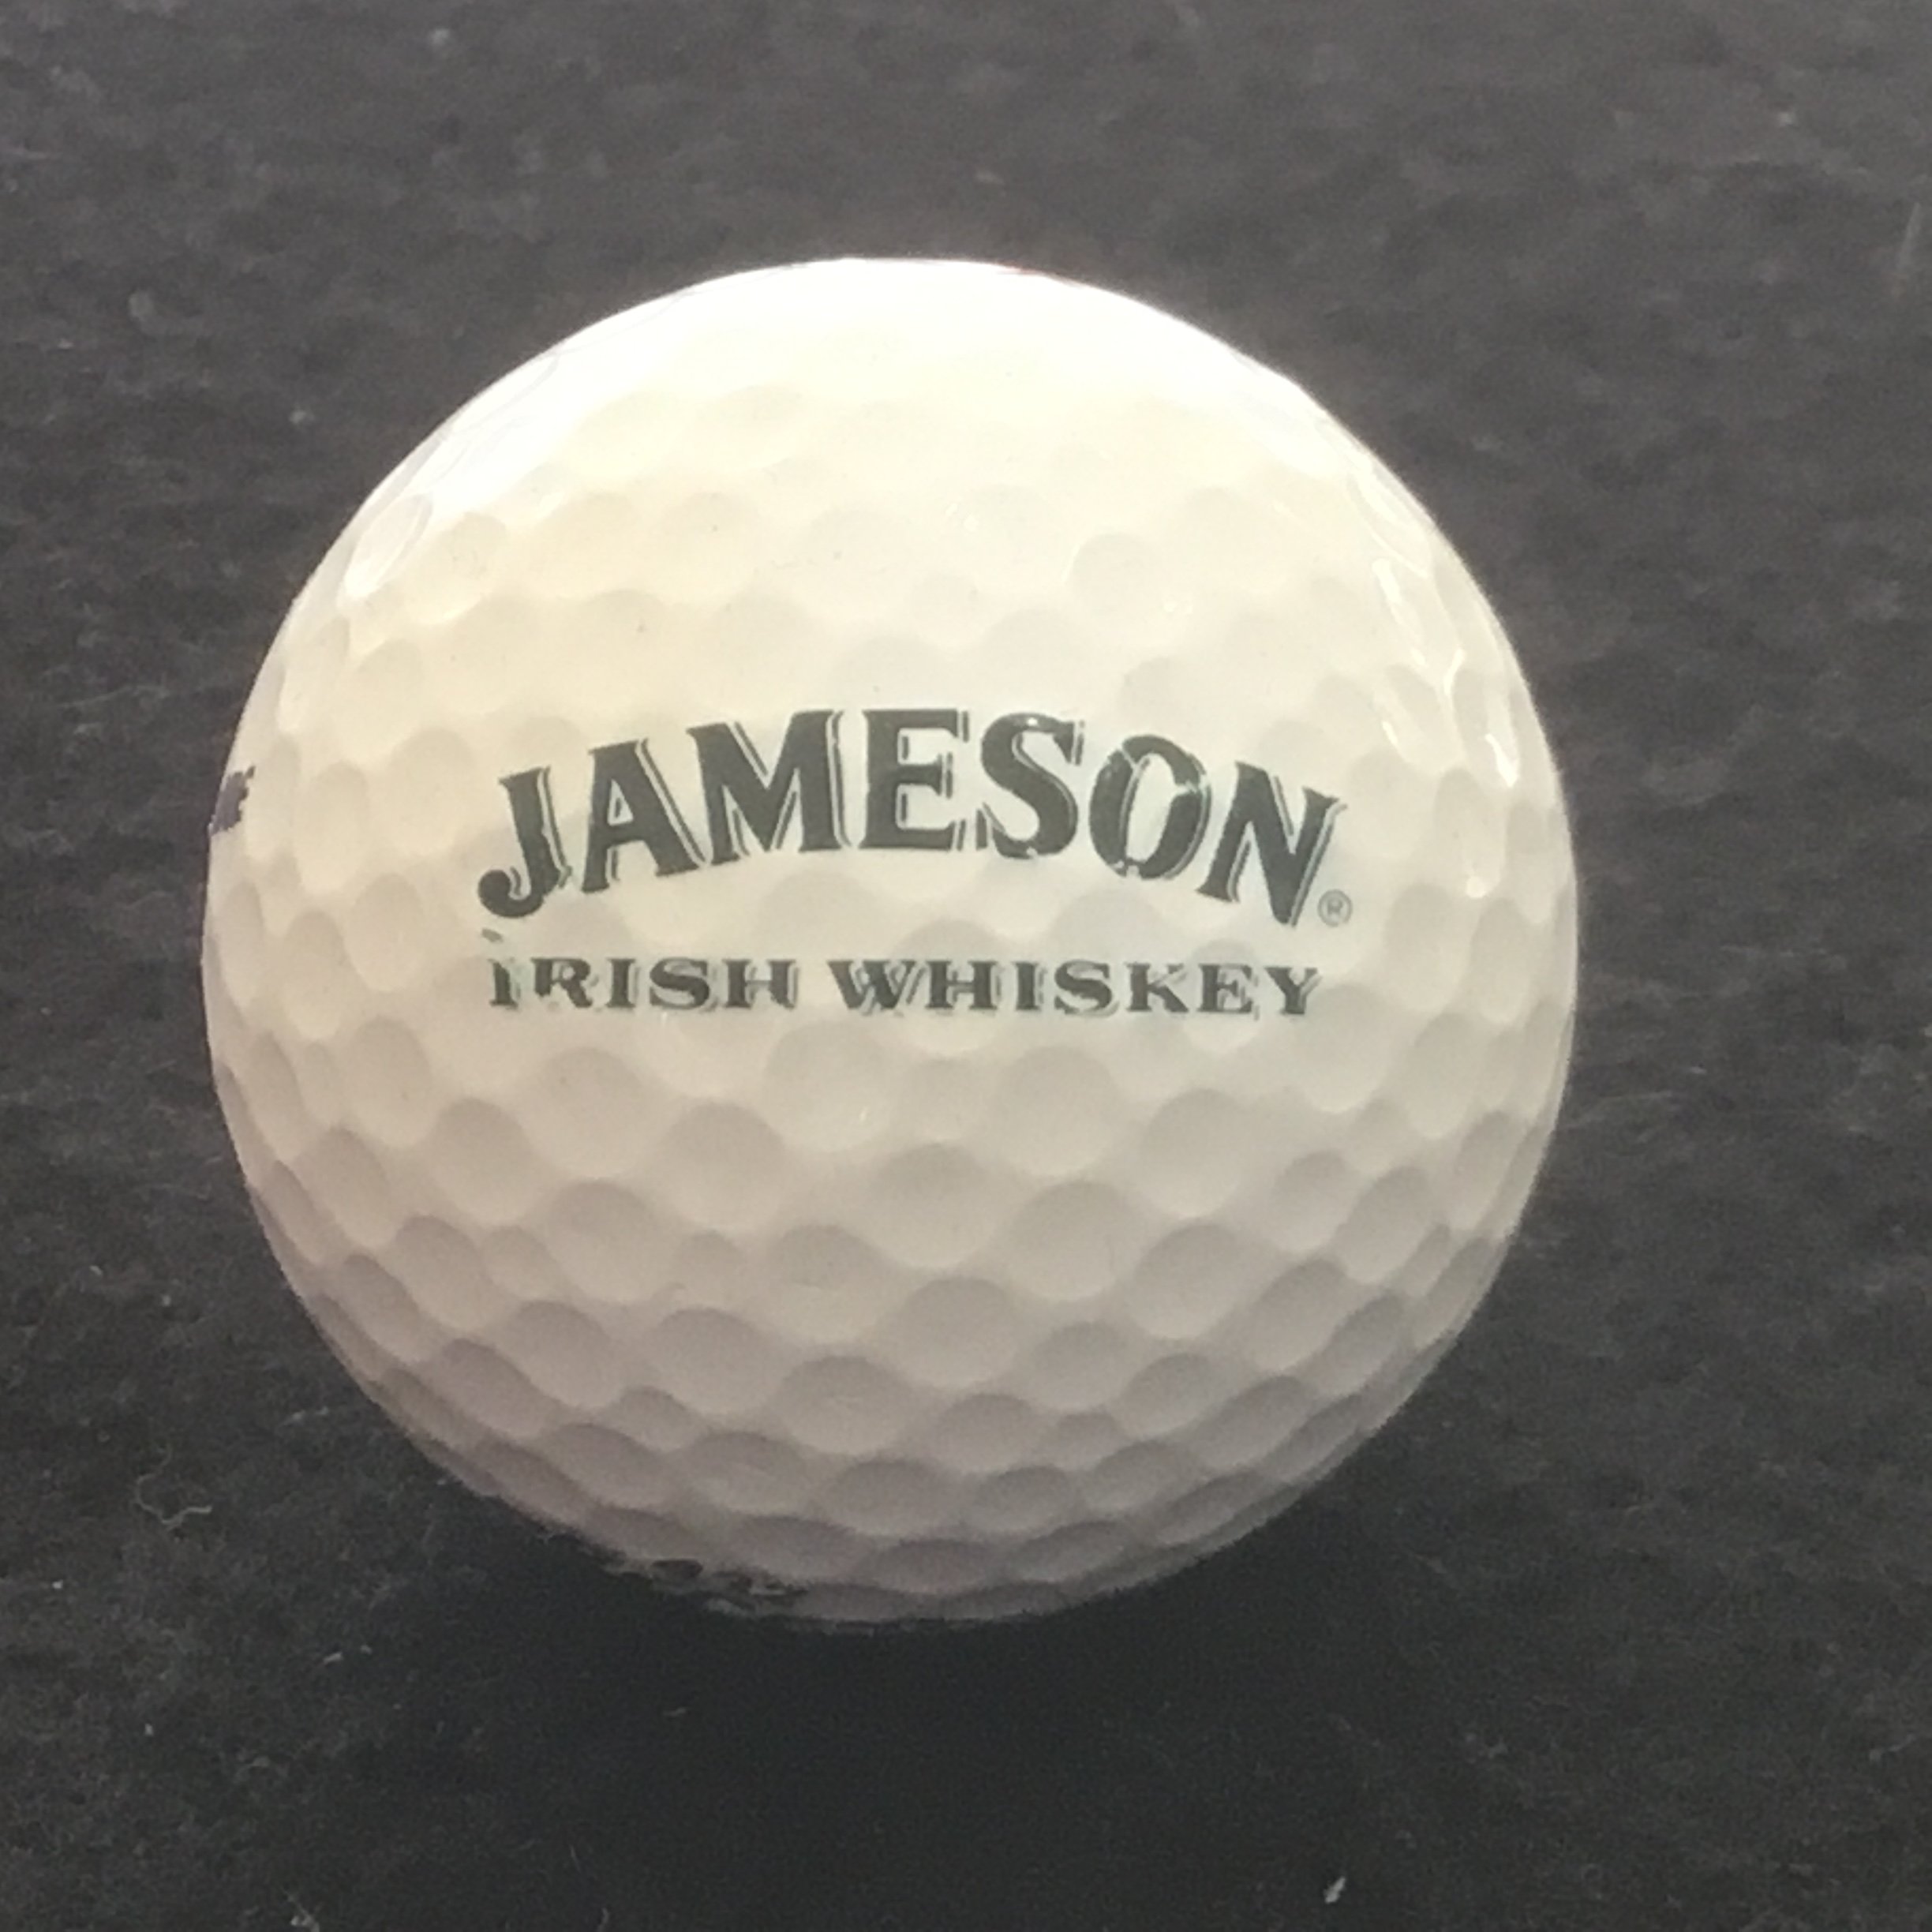 Irish Whiskey Balls